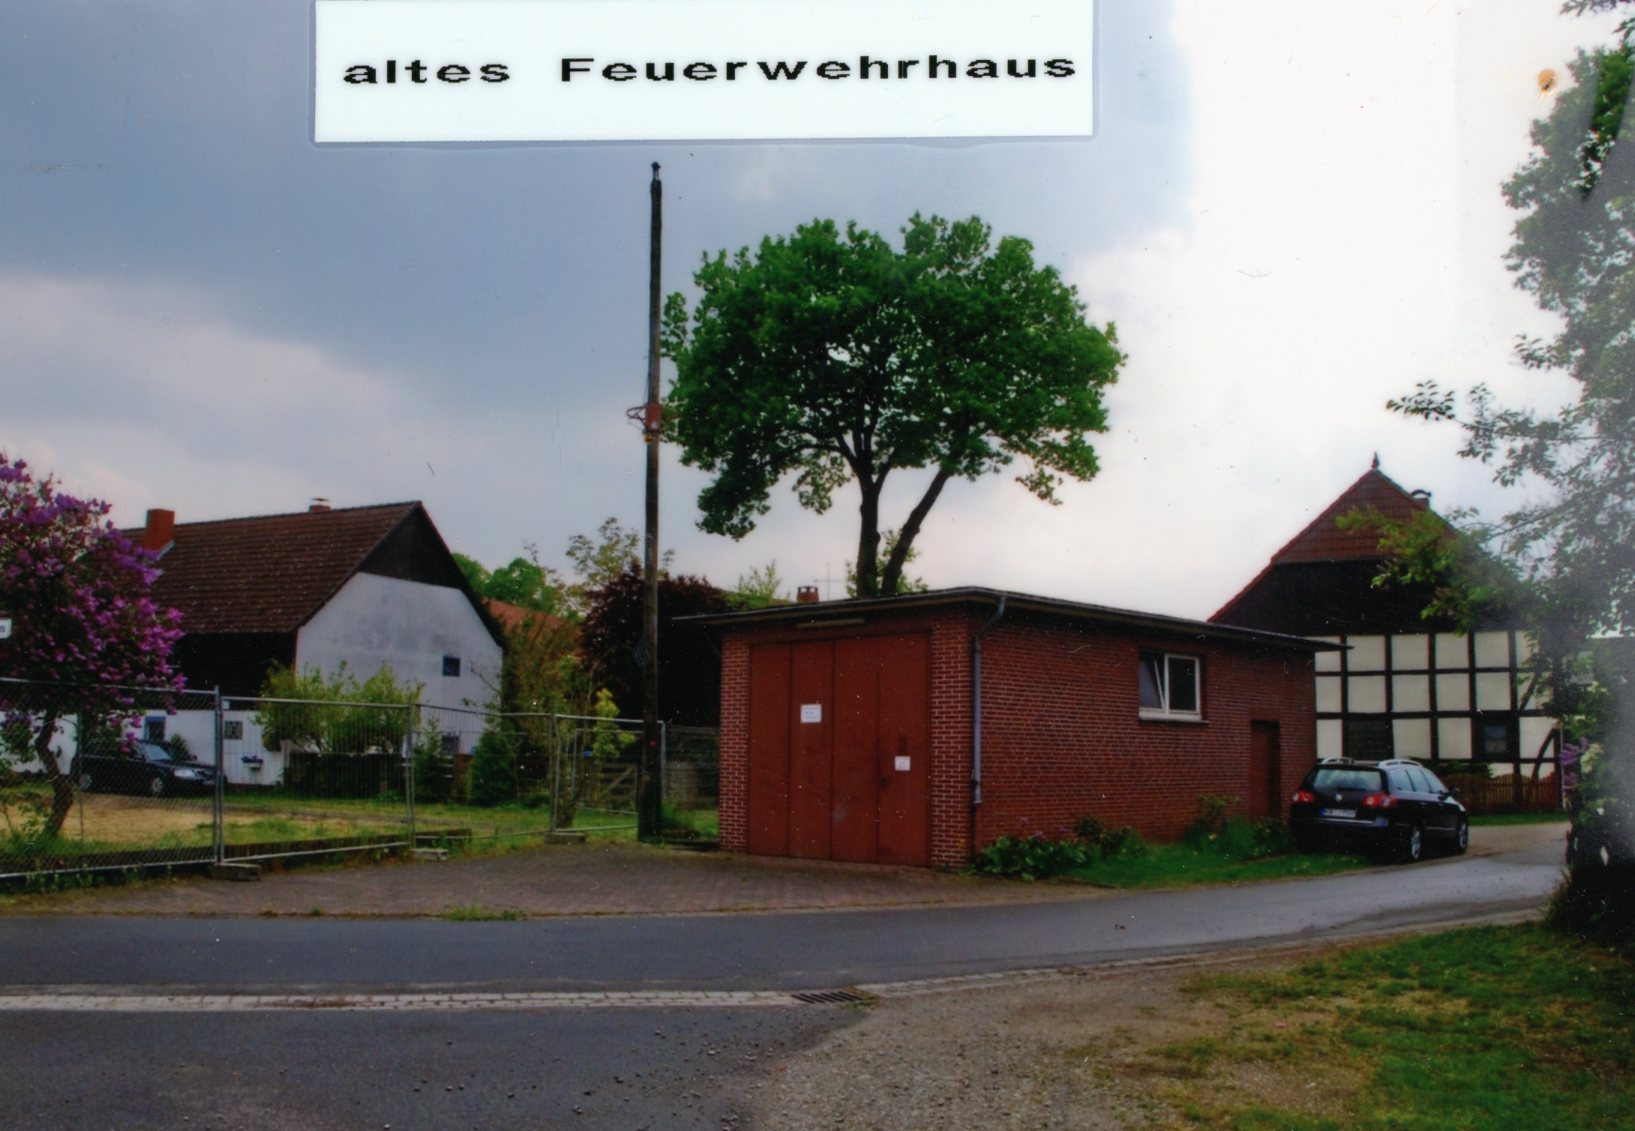 2010 Alte DorfstrasseAltes Feuerwehrhaus006